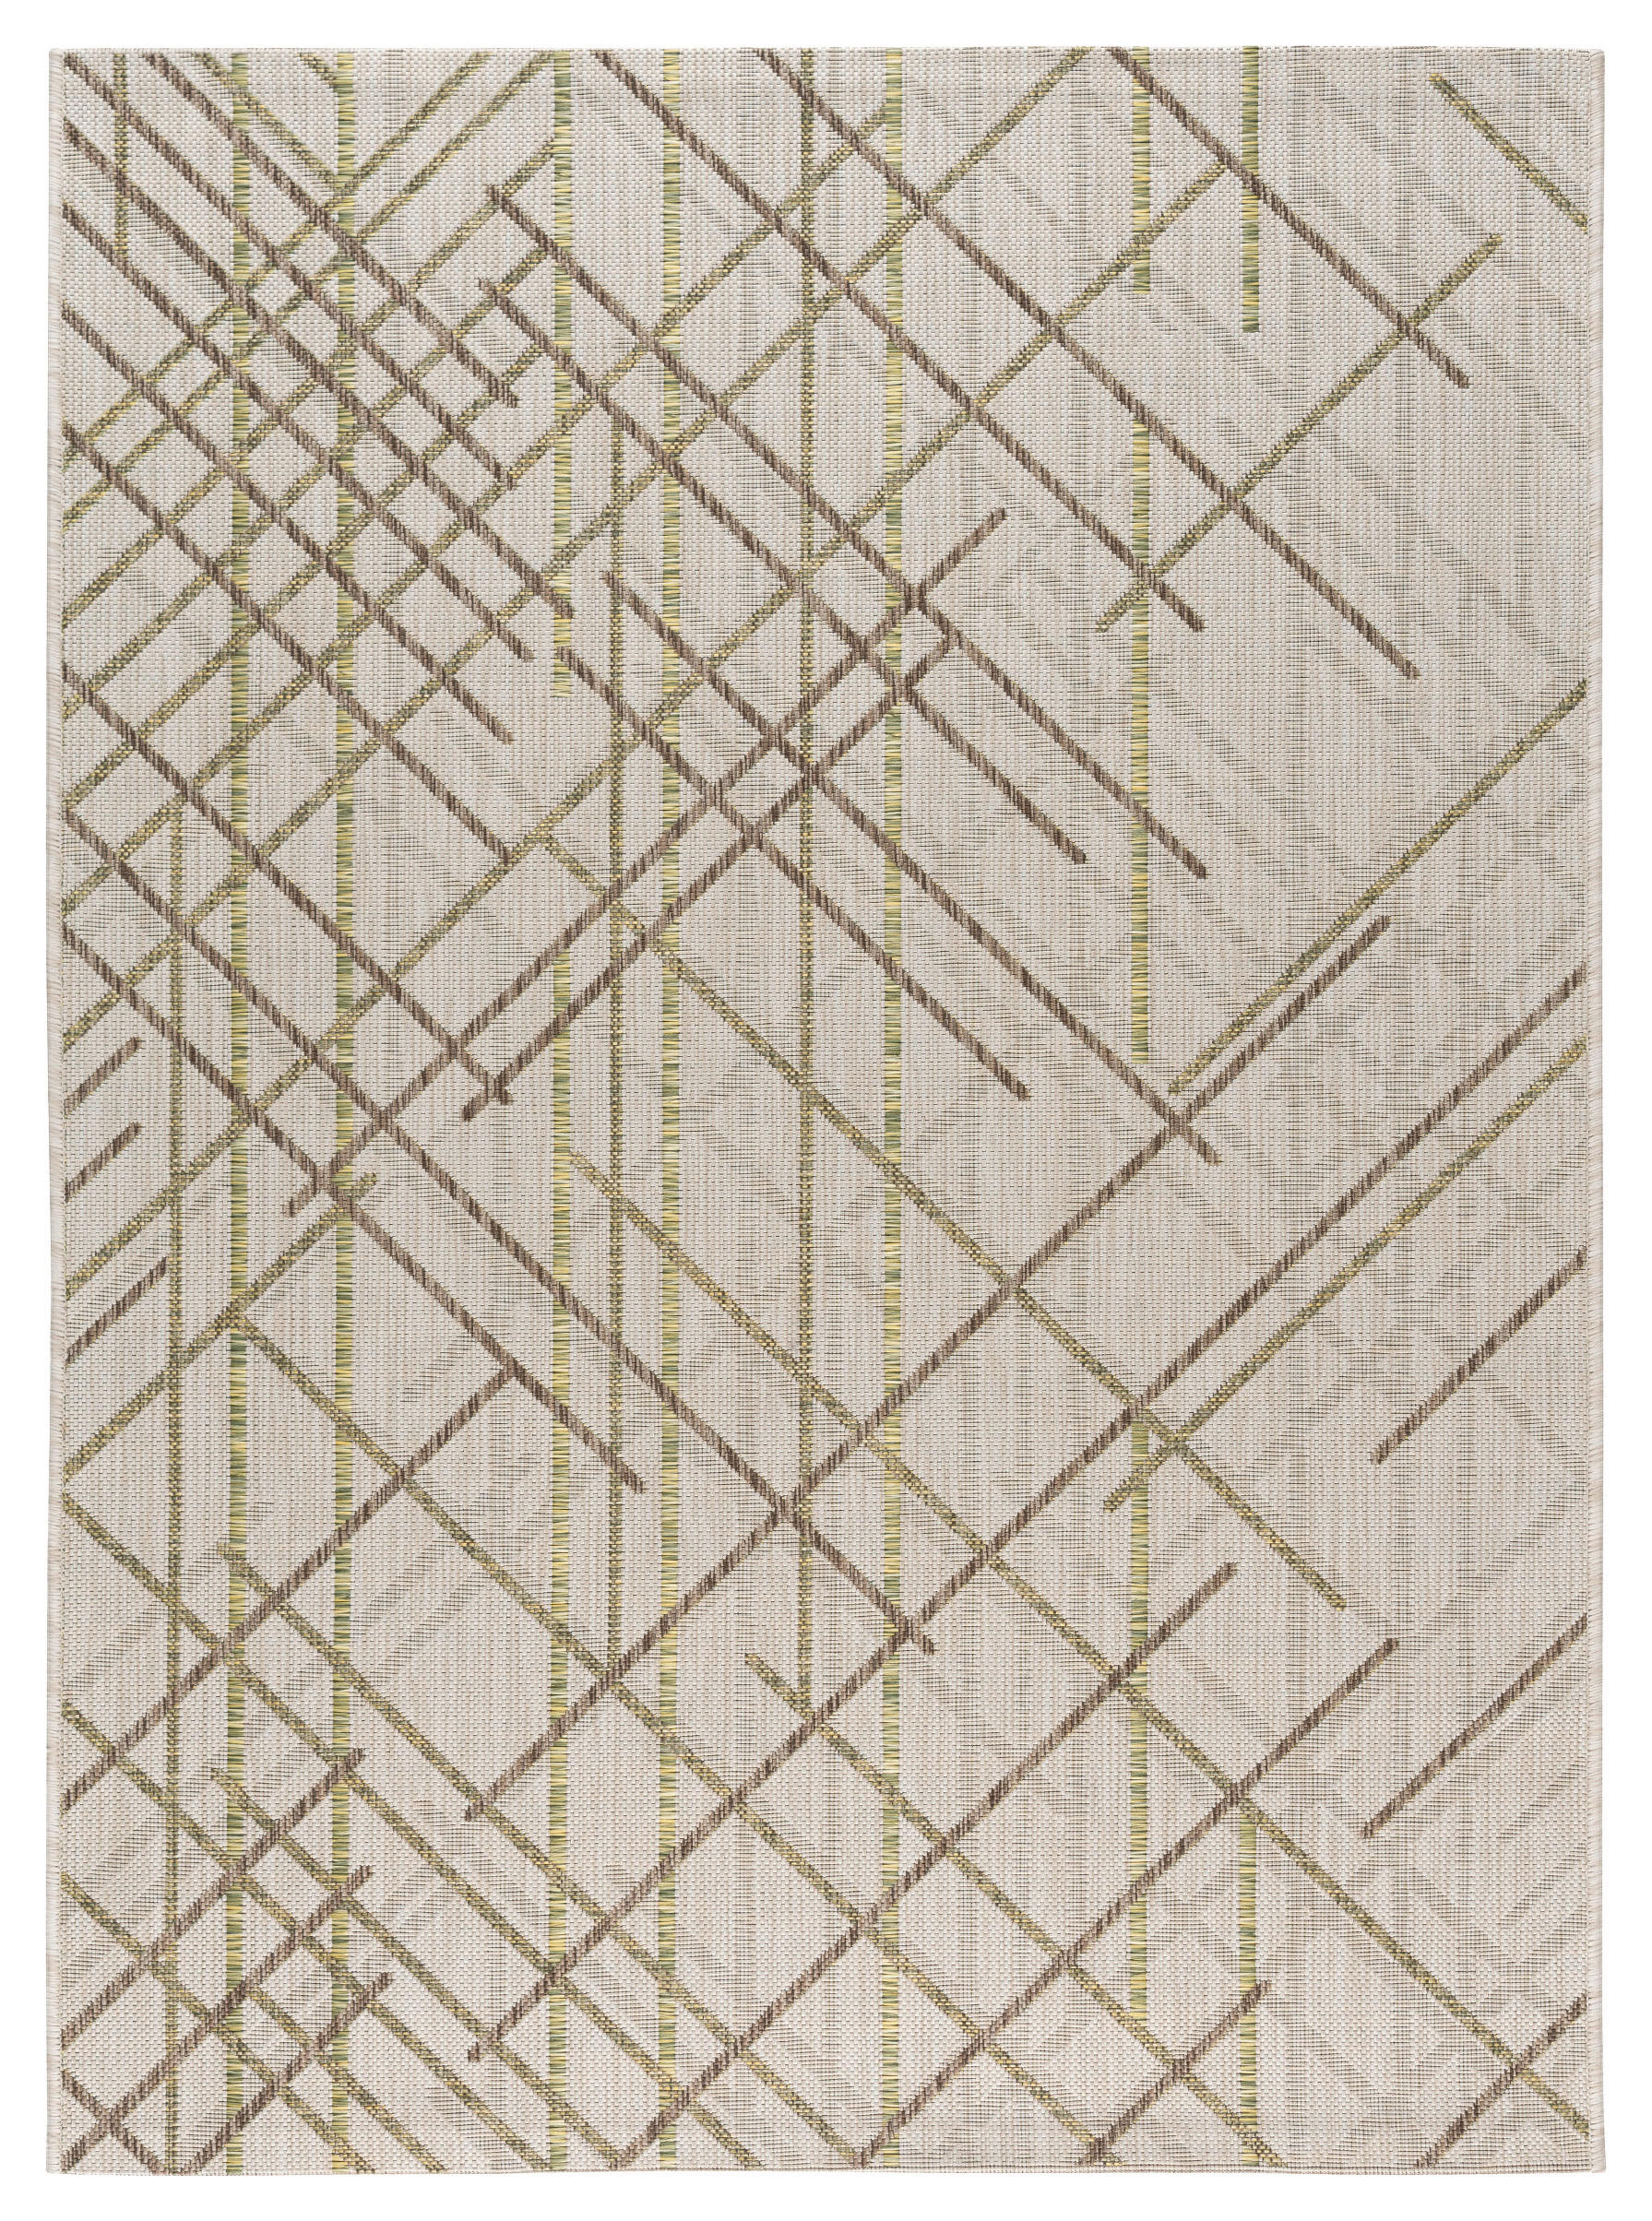 Livetastic VENKOVNÍ KOBEREC, 160/230 cm, šedá, zelená - šedá,zelená - textil